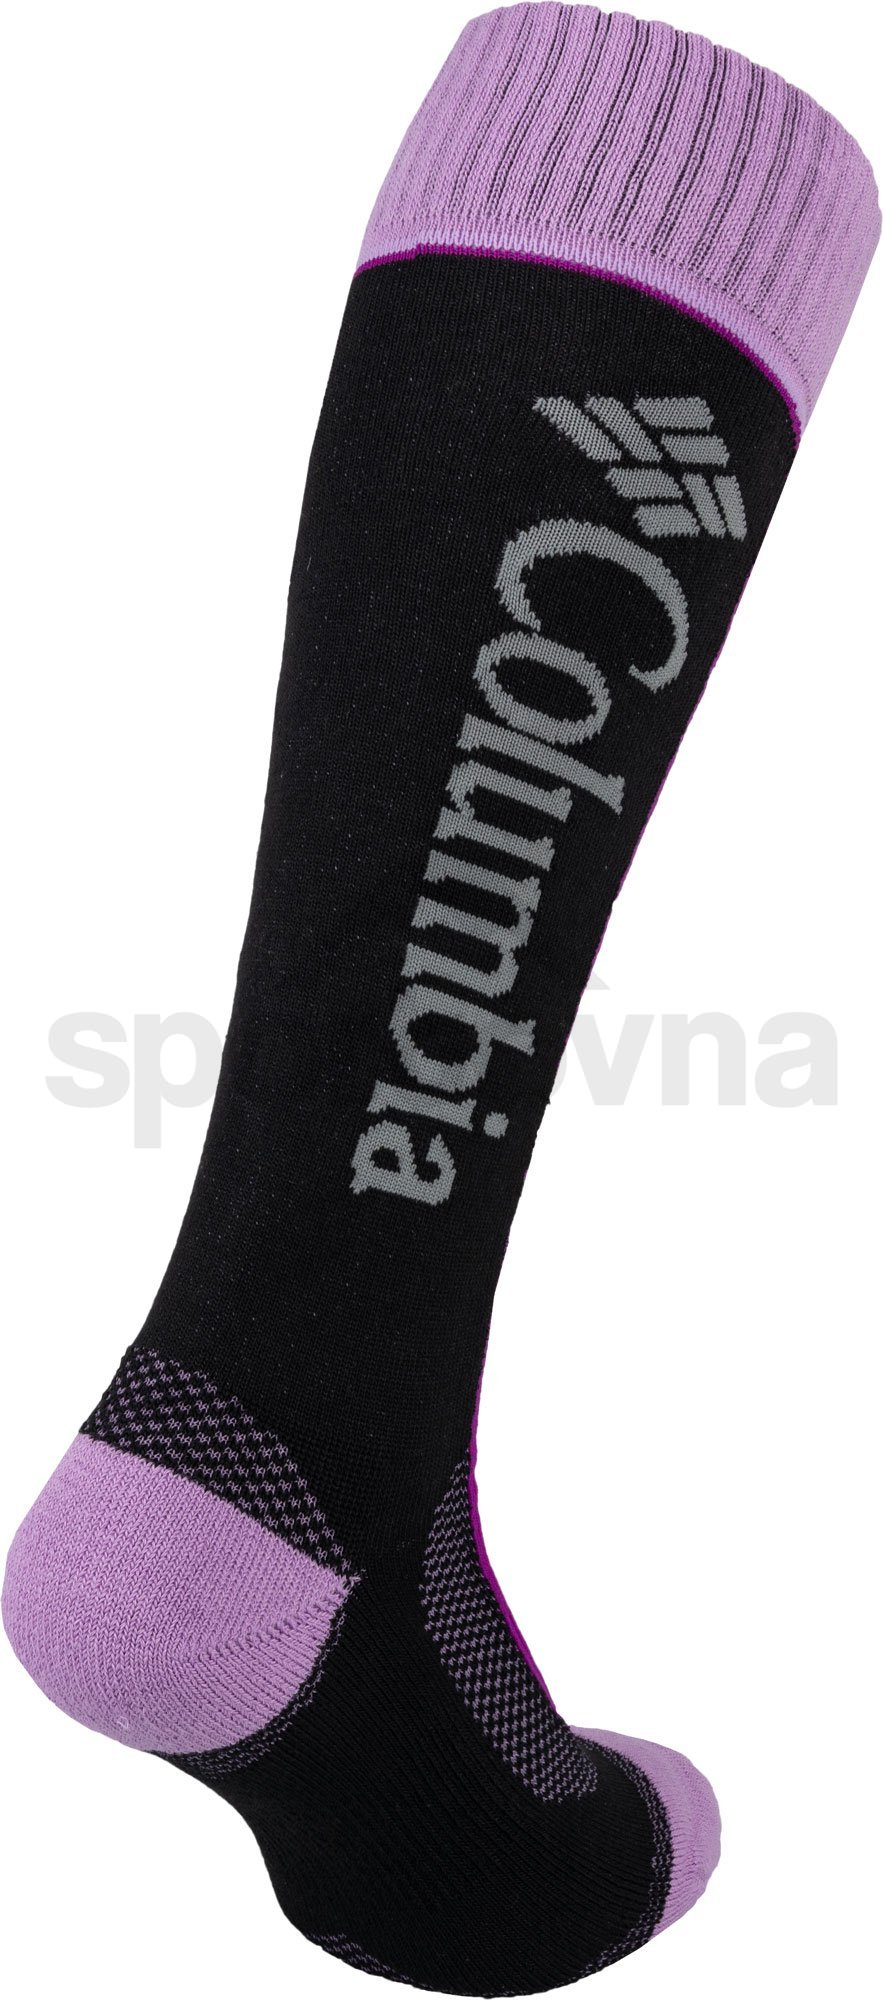 Ponožky Columbia Thermolite Logo W - fialová/černá